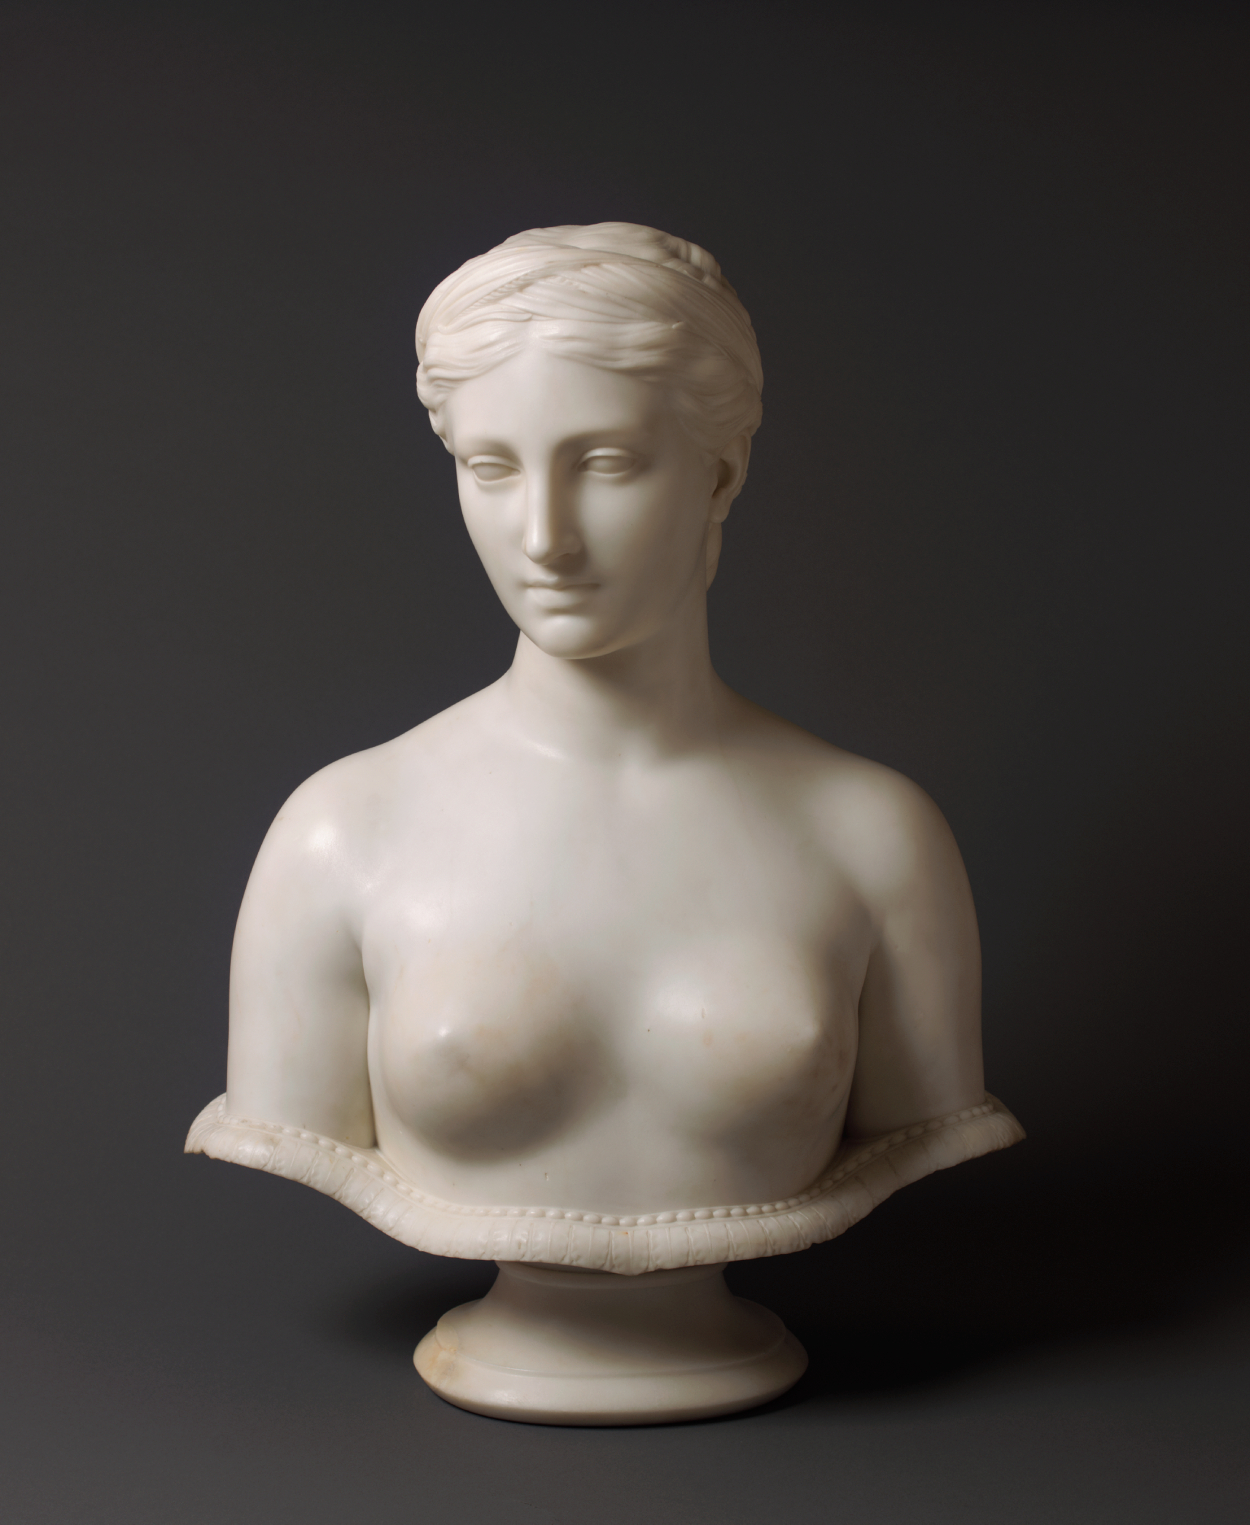 Proserpina by Hiram Powers - ong. 1860 - 64,77 x 50,8 x 30,48 cm 